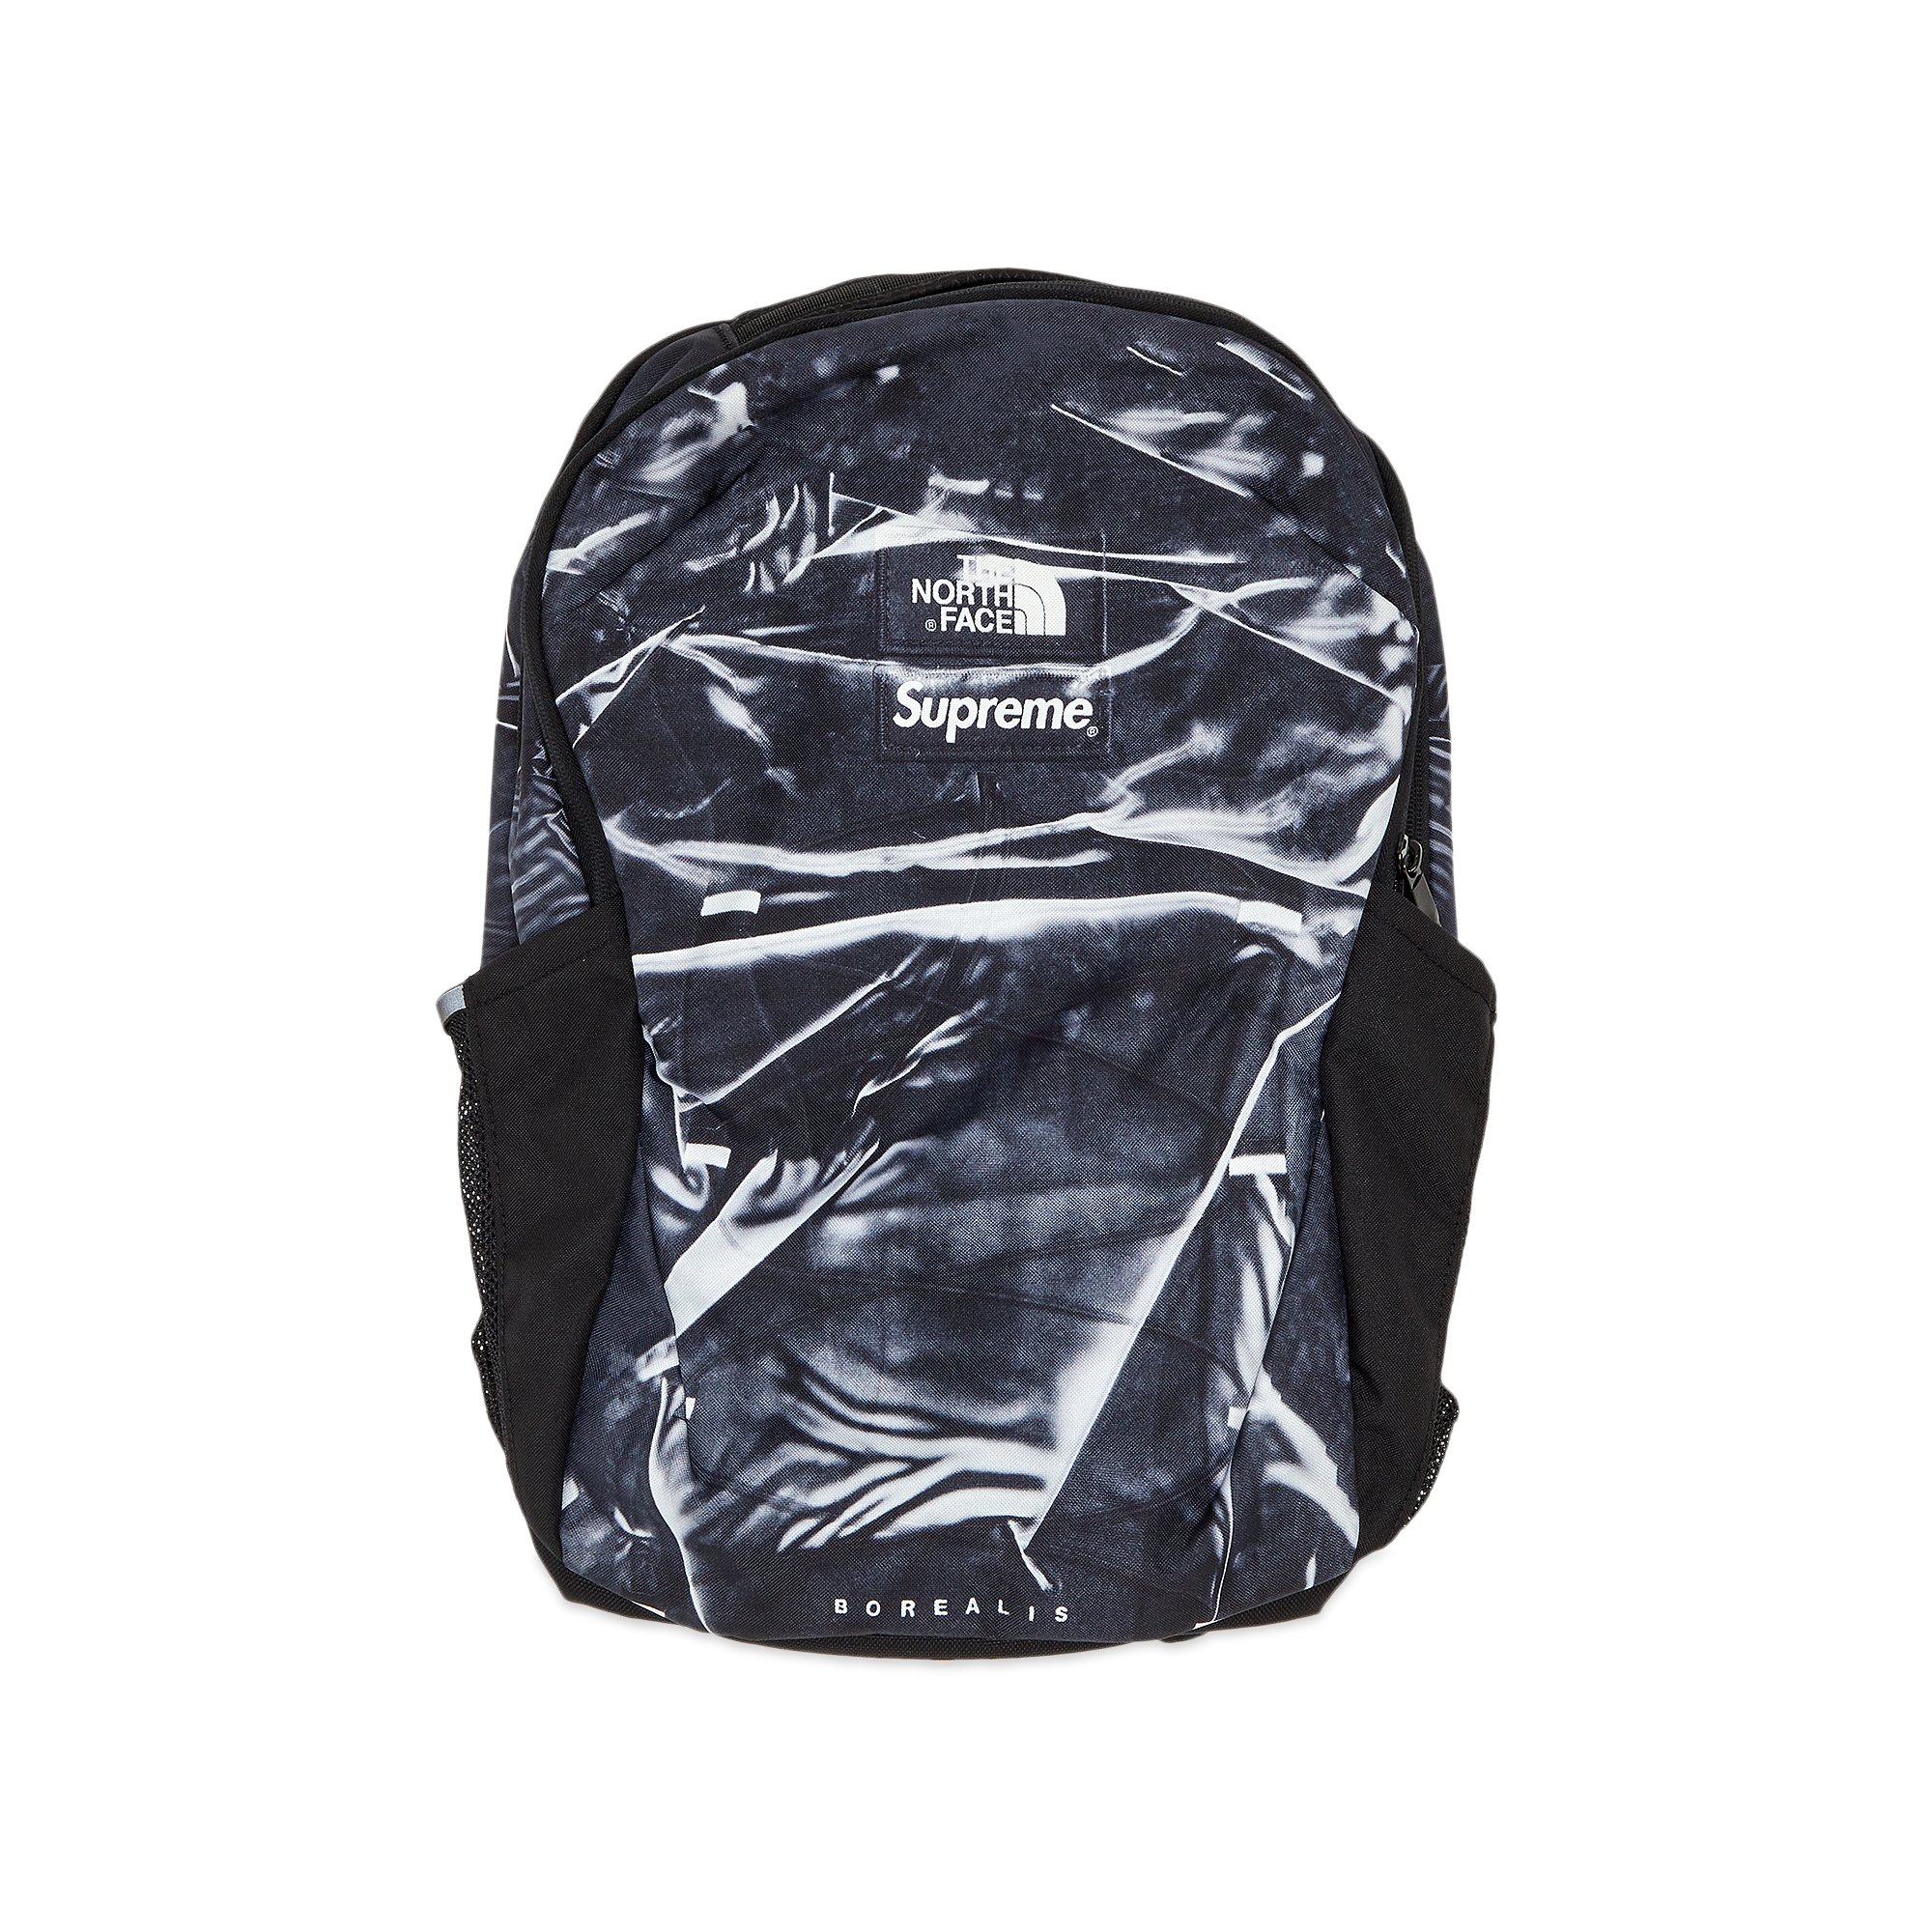 Supreme x The North Face Printed Borealis Backpack 'Black'